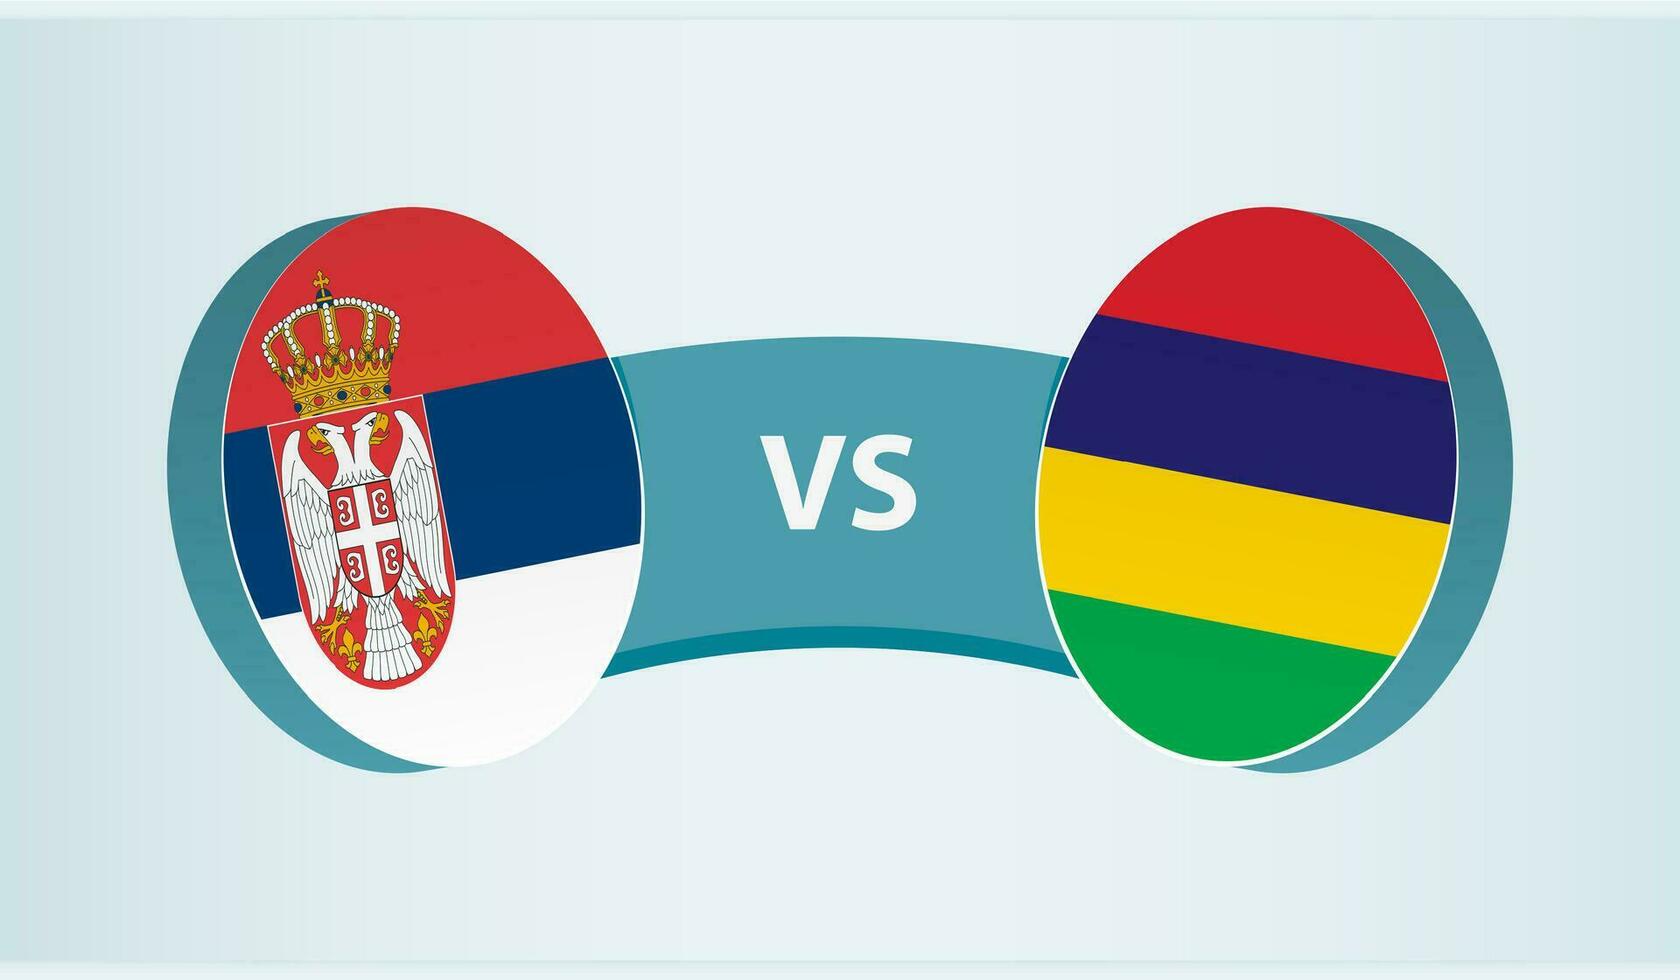 serbia mot Mauritius, team sporter konkurrens begrepp. vektor